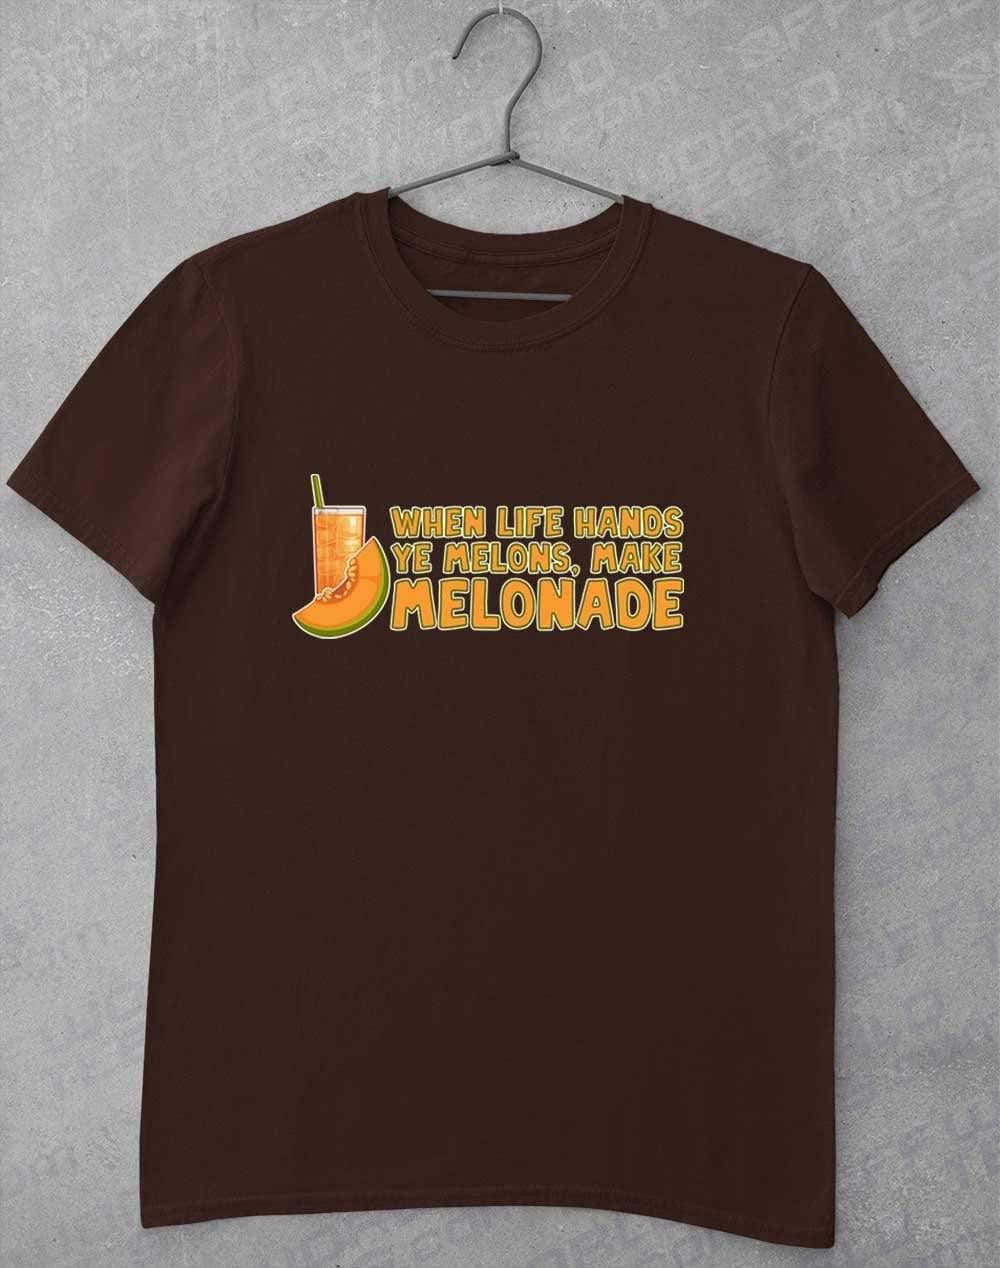 Make Melonade T-Shirt S / Dark Chocolate  - Off World Tees